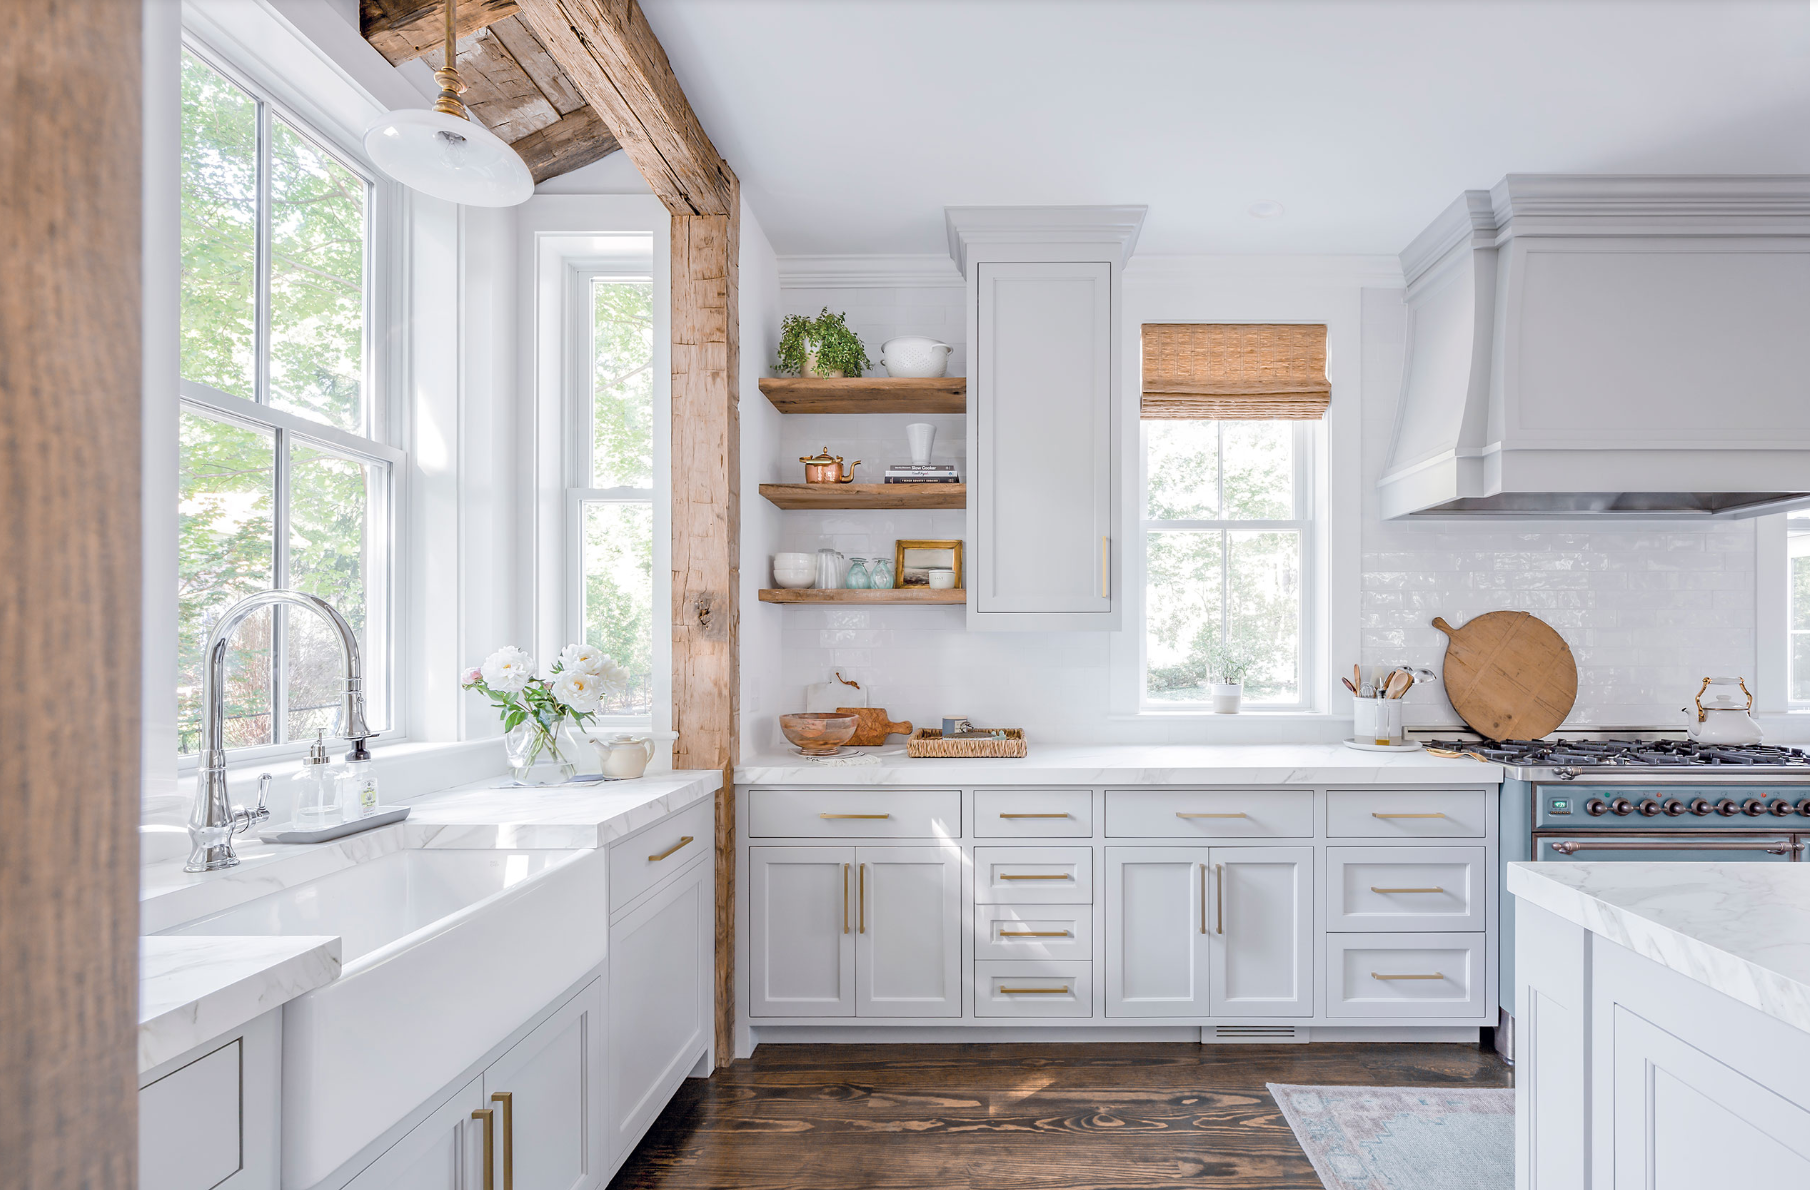 Popular Types of Modern Farmhouse Kitchen Cabinets